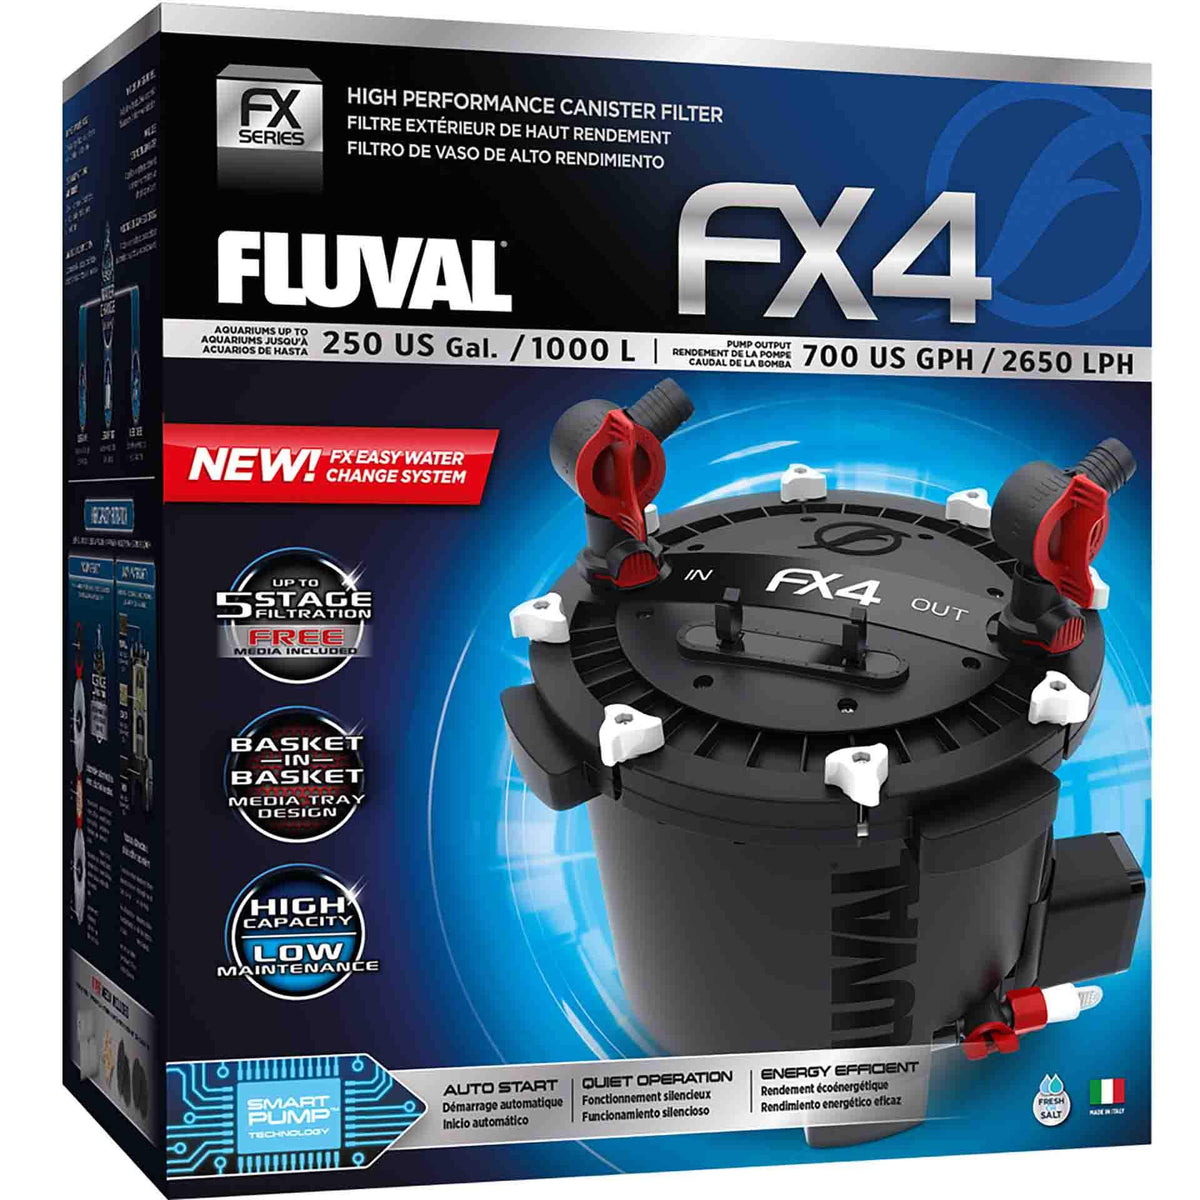 Fluval FX4 2650lph Canister Filter for aquarium tanks up to 1000 litres